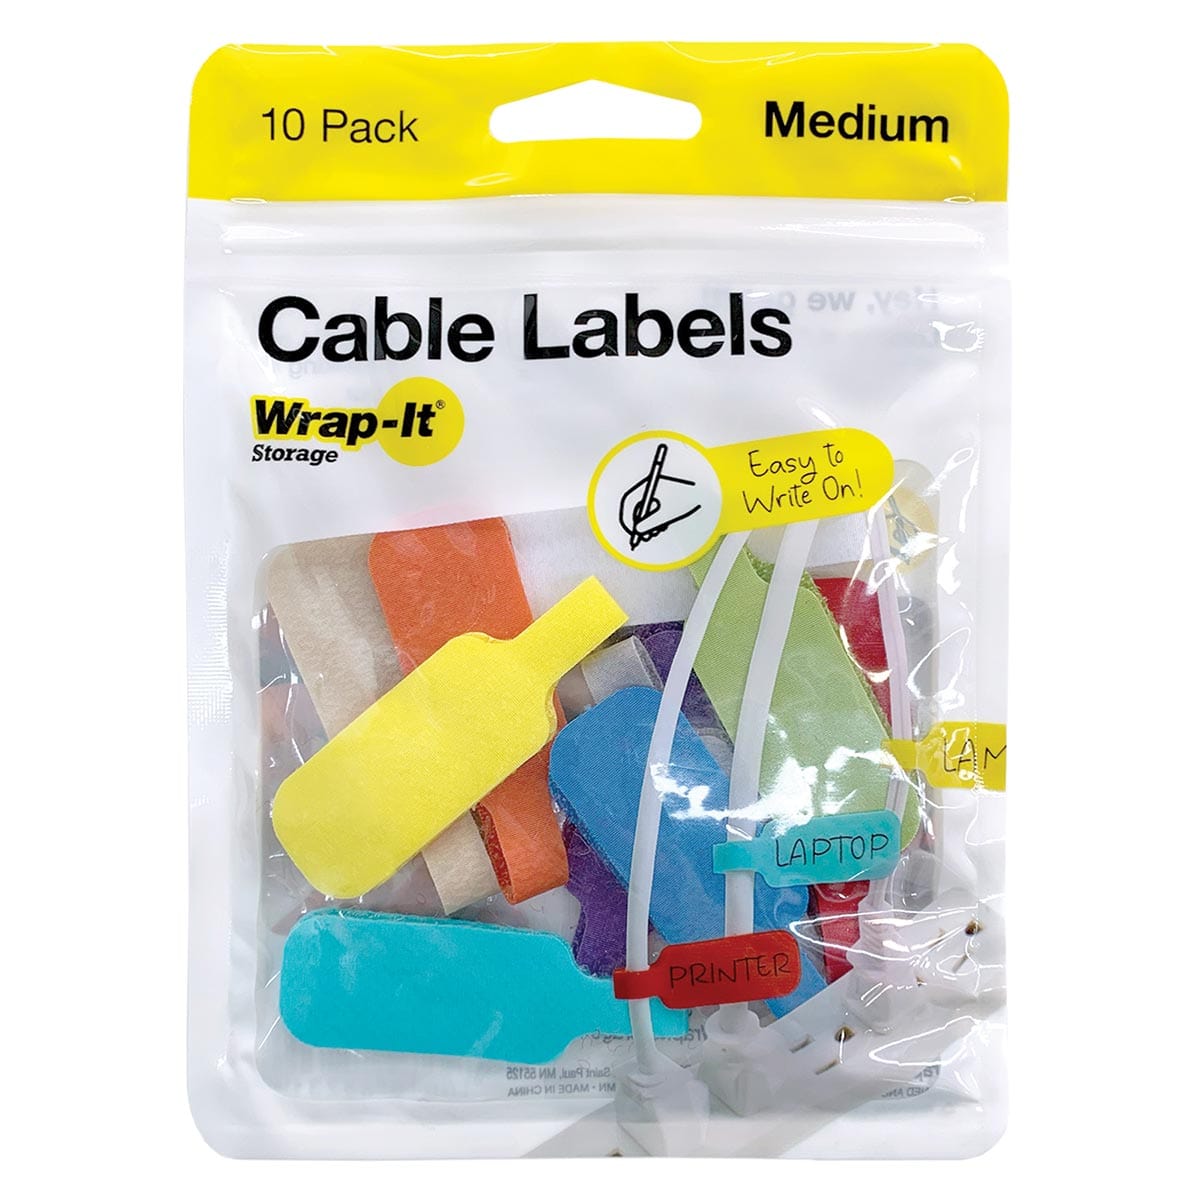 Wrap-It Storage Cable Labels - Medium (10-Pack)